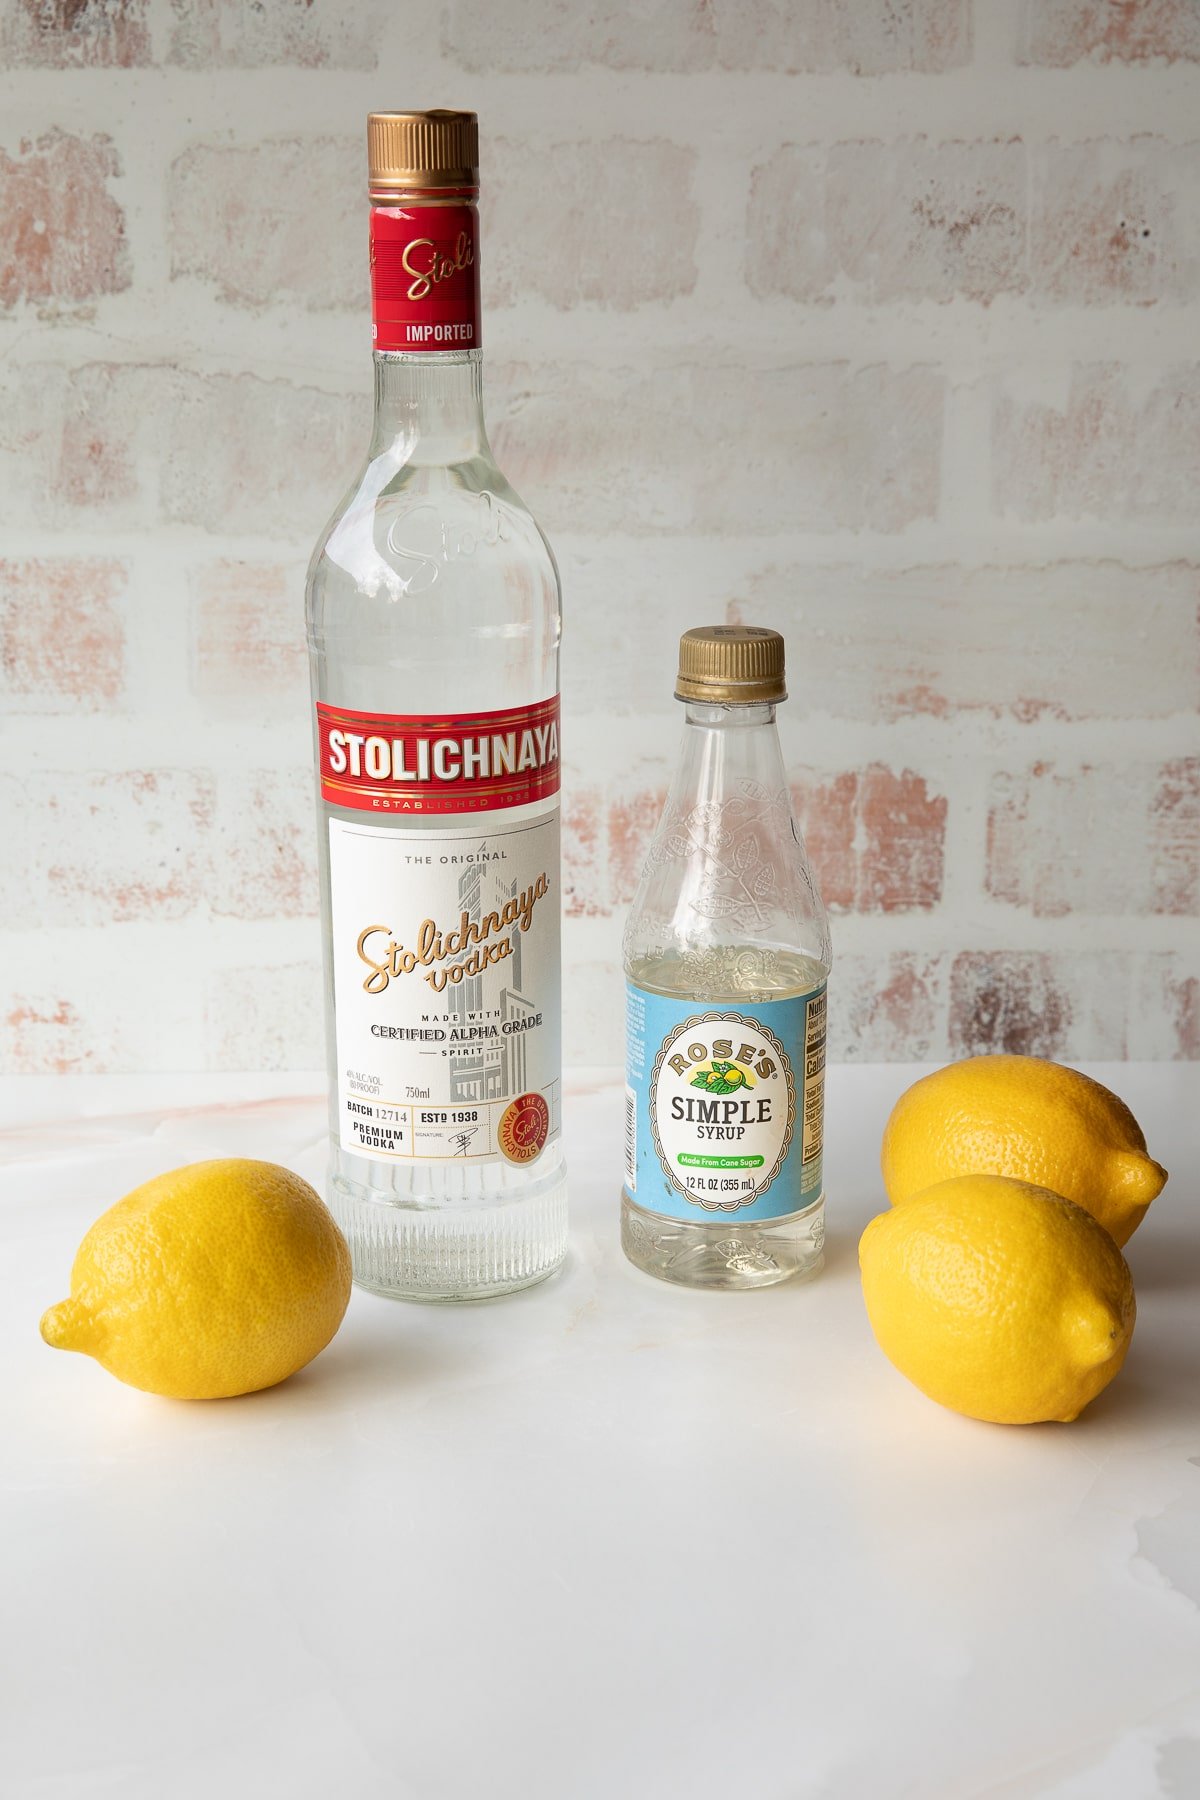 lemon drop shot ingredients of lemons, simple syrup, and vodka.